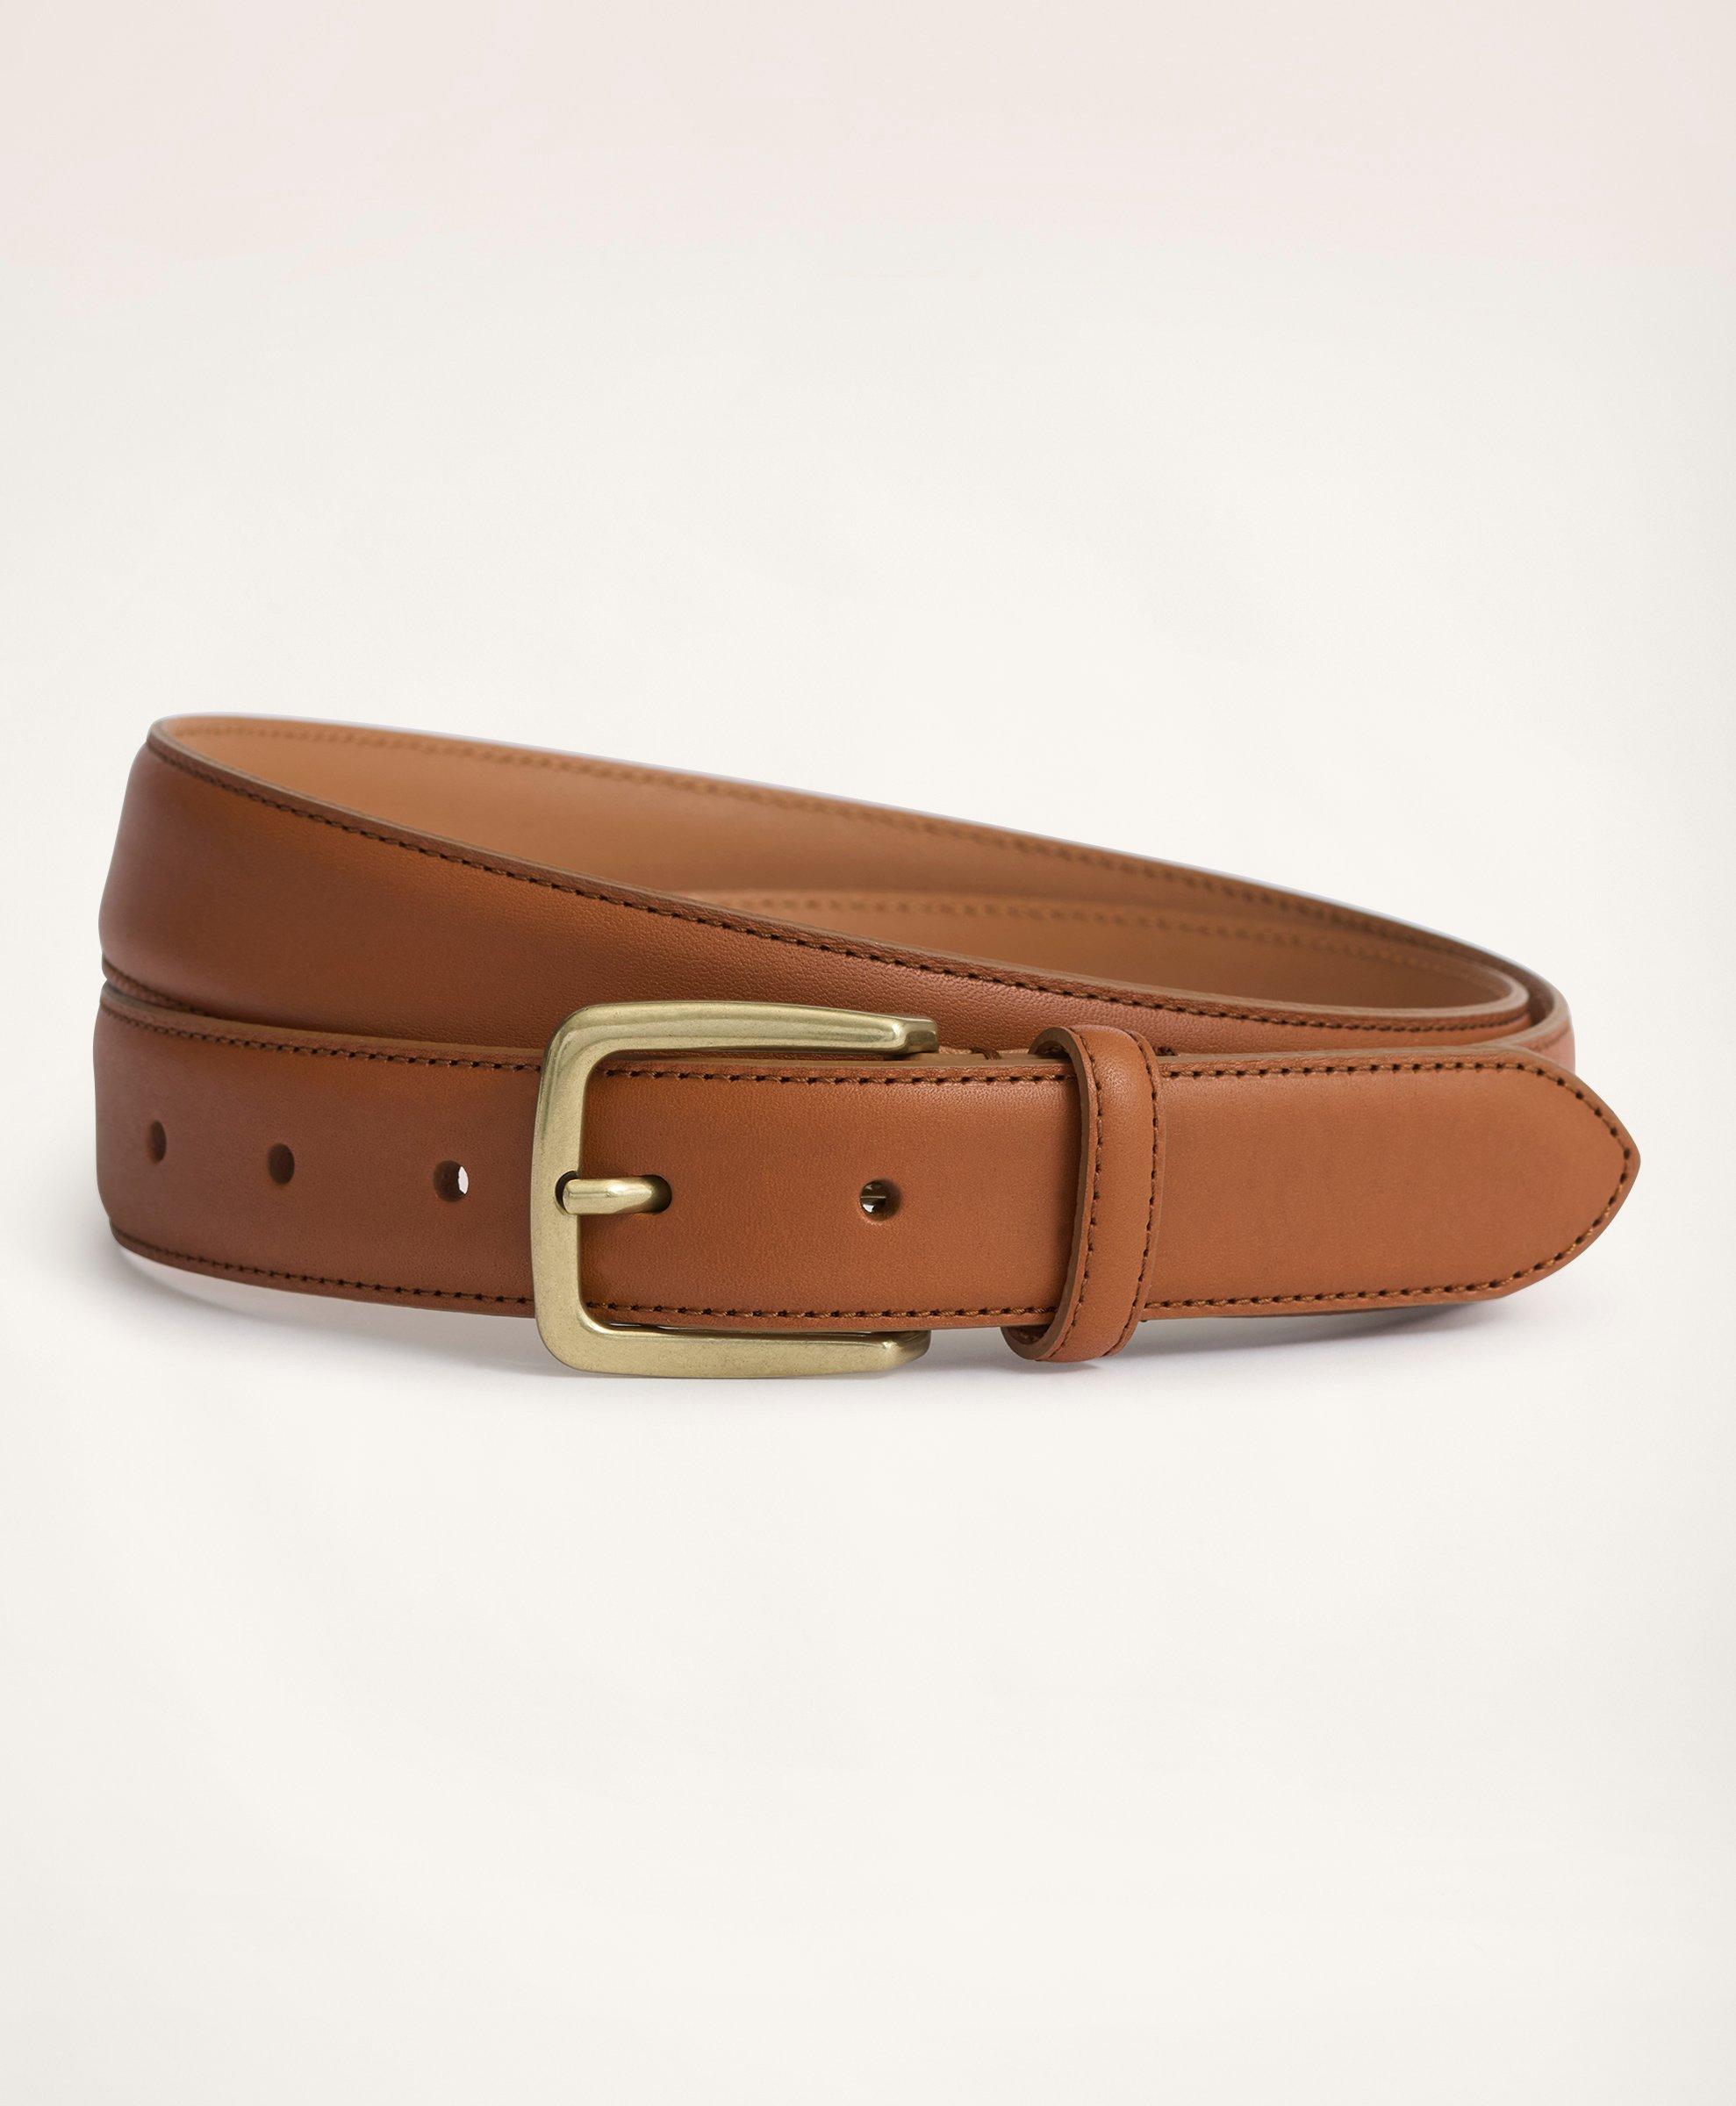 Stitched Leather Belt, image 1